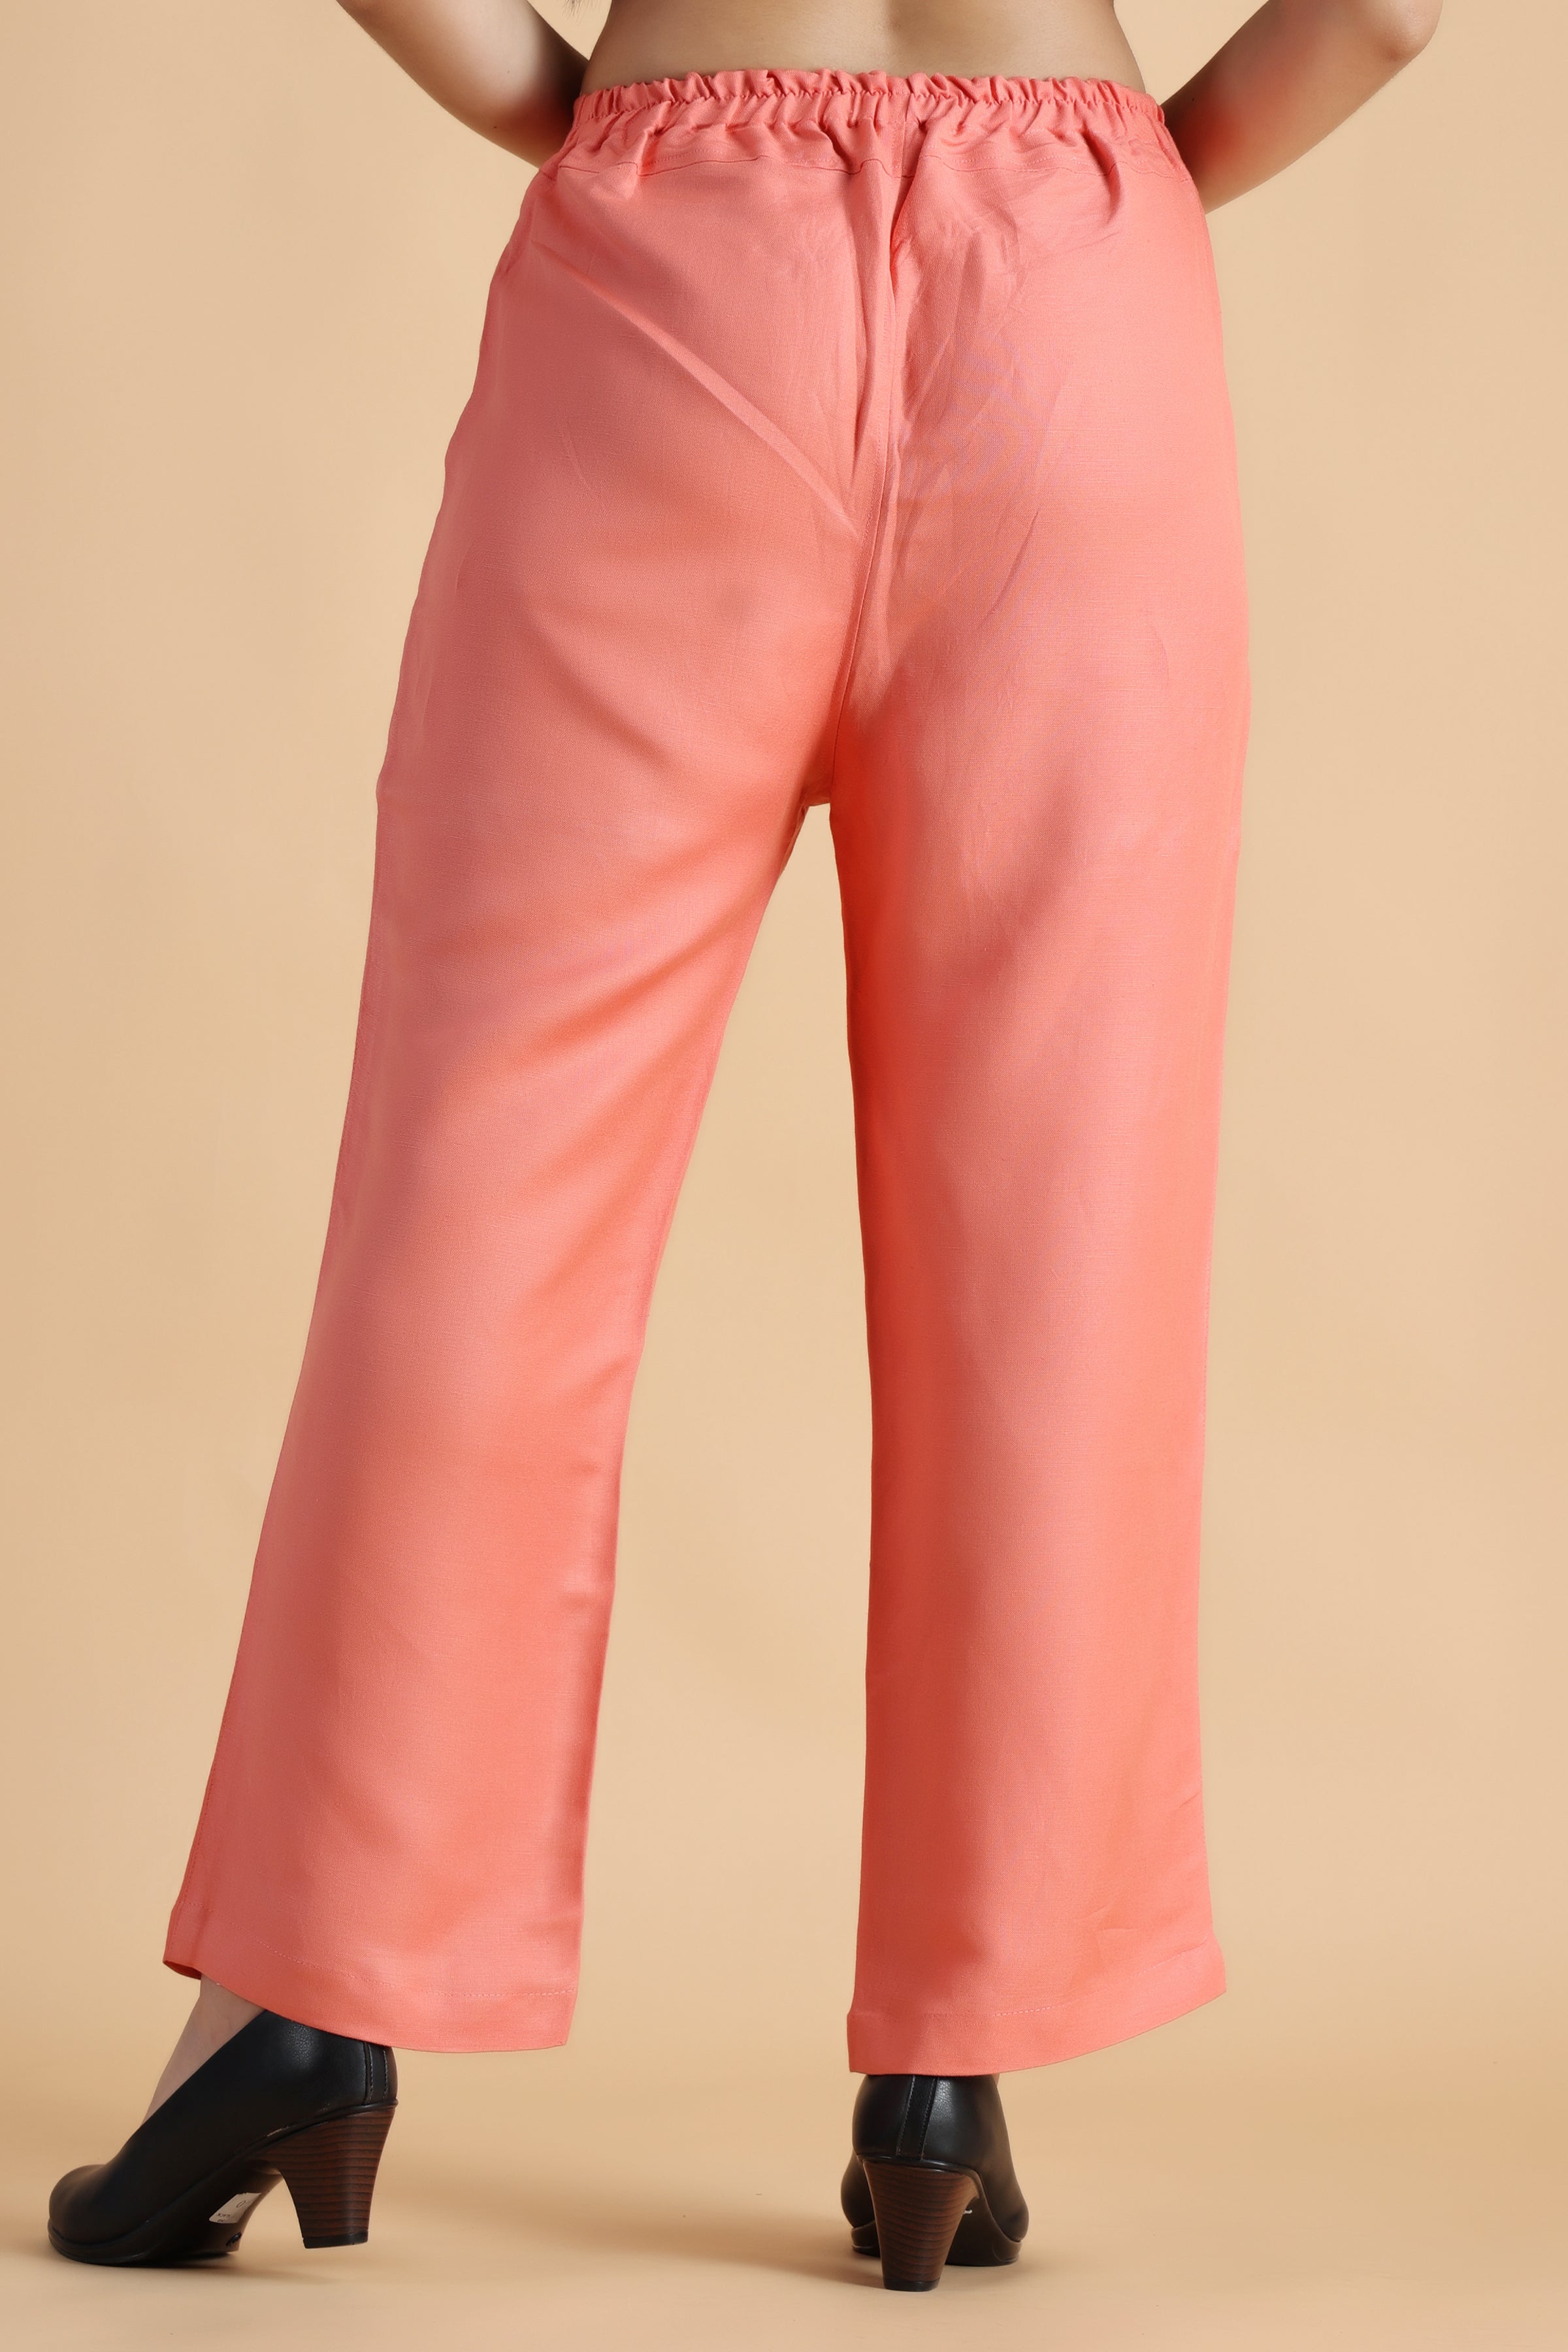 Buy Women Peach Slim Fit Solid Casual Trousers Online  806974  Allen Solly